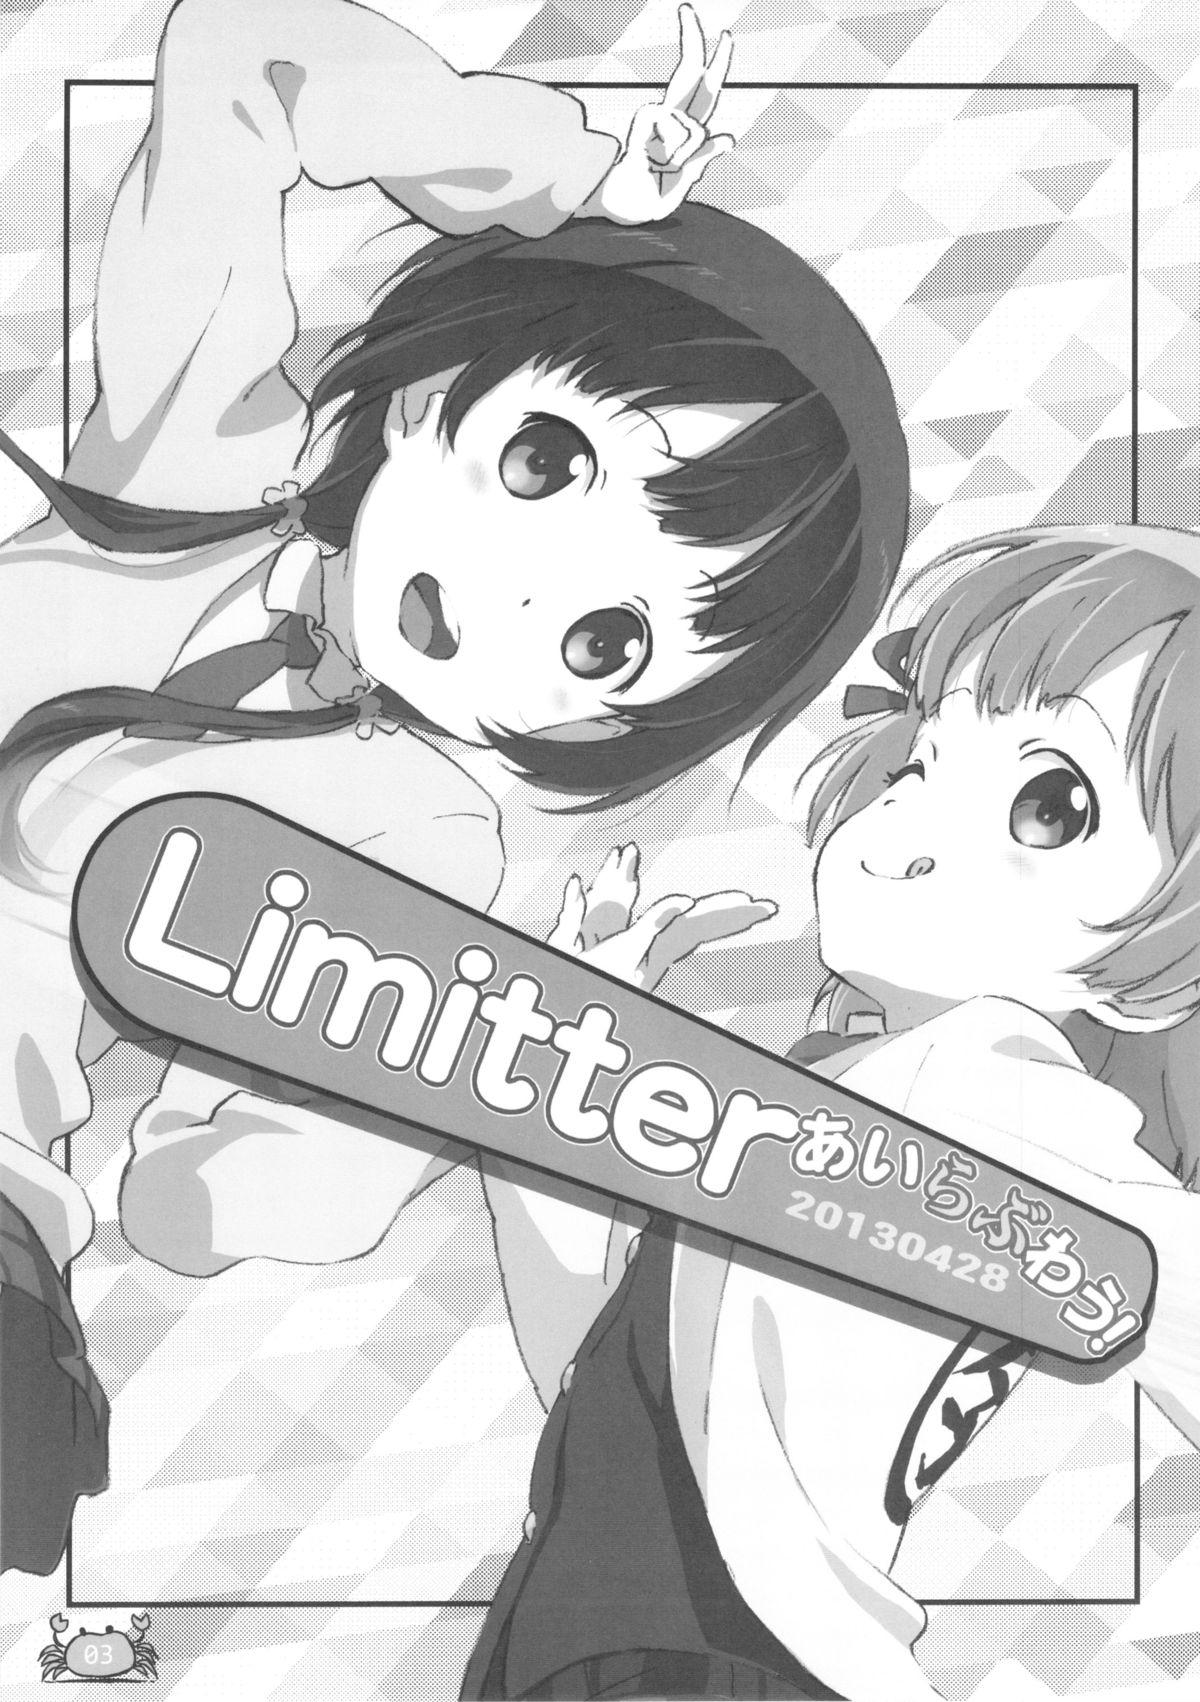 1080p Limitter I Love Wau! 20130428 - Aiura Gay - Page 3